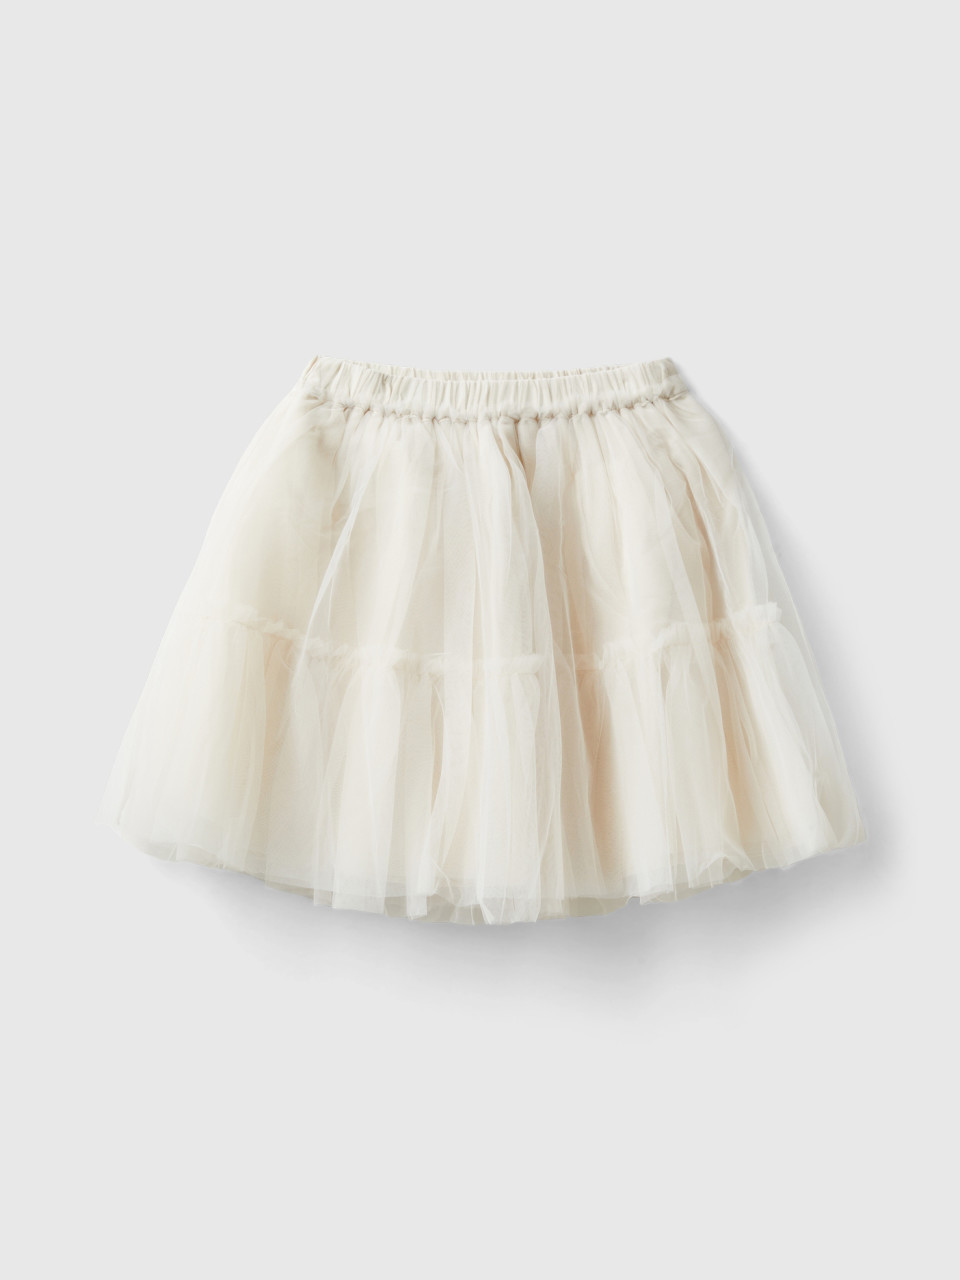 Benetton, Tulle Skirt, Creamy White, Kids